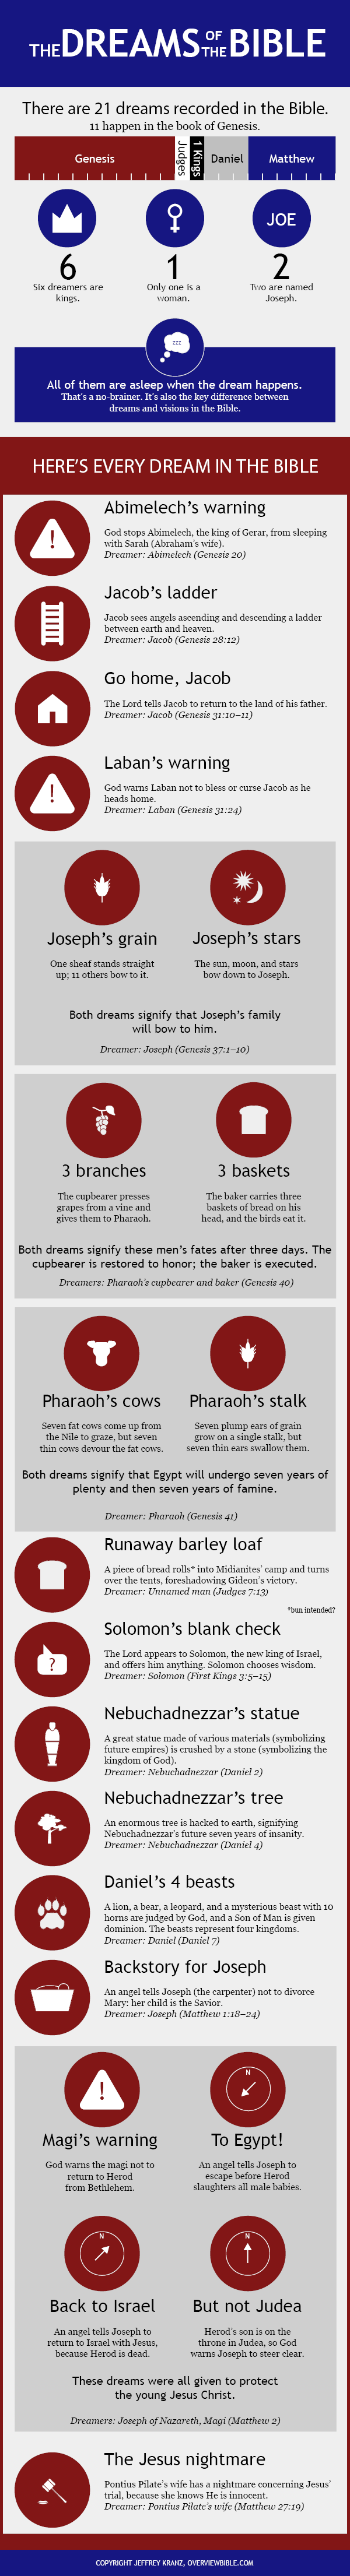 infographic.bibledreams3